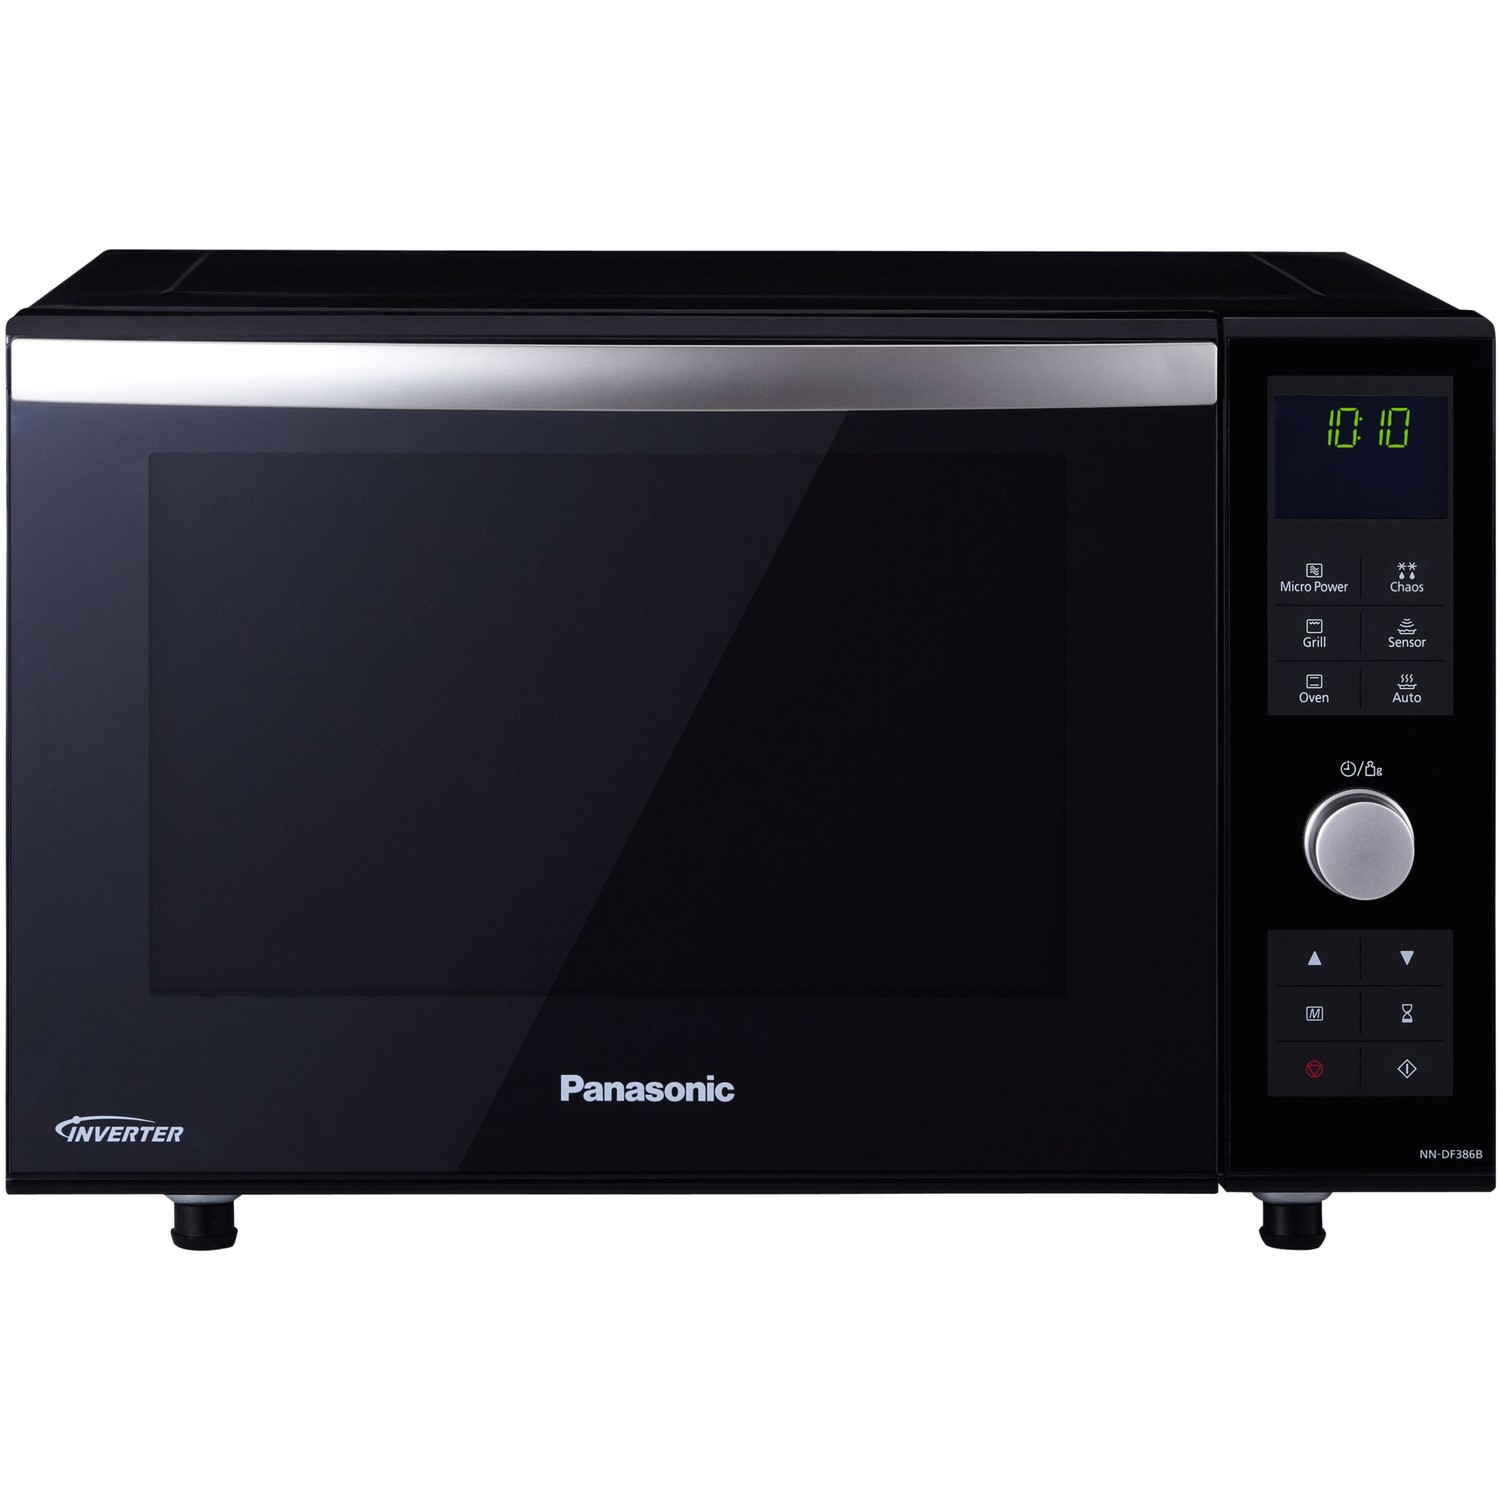 Panasonic 23L Combination Microwave Oven - Black